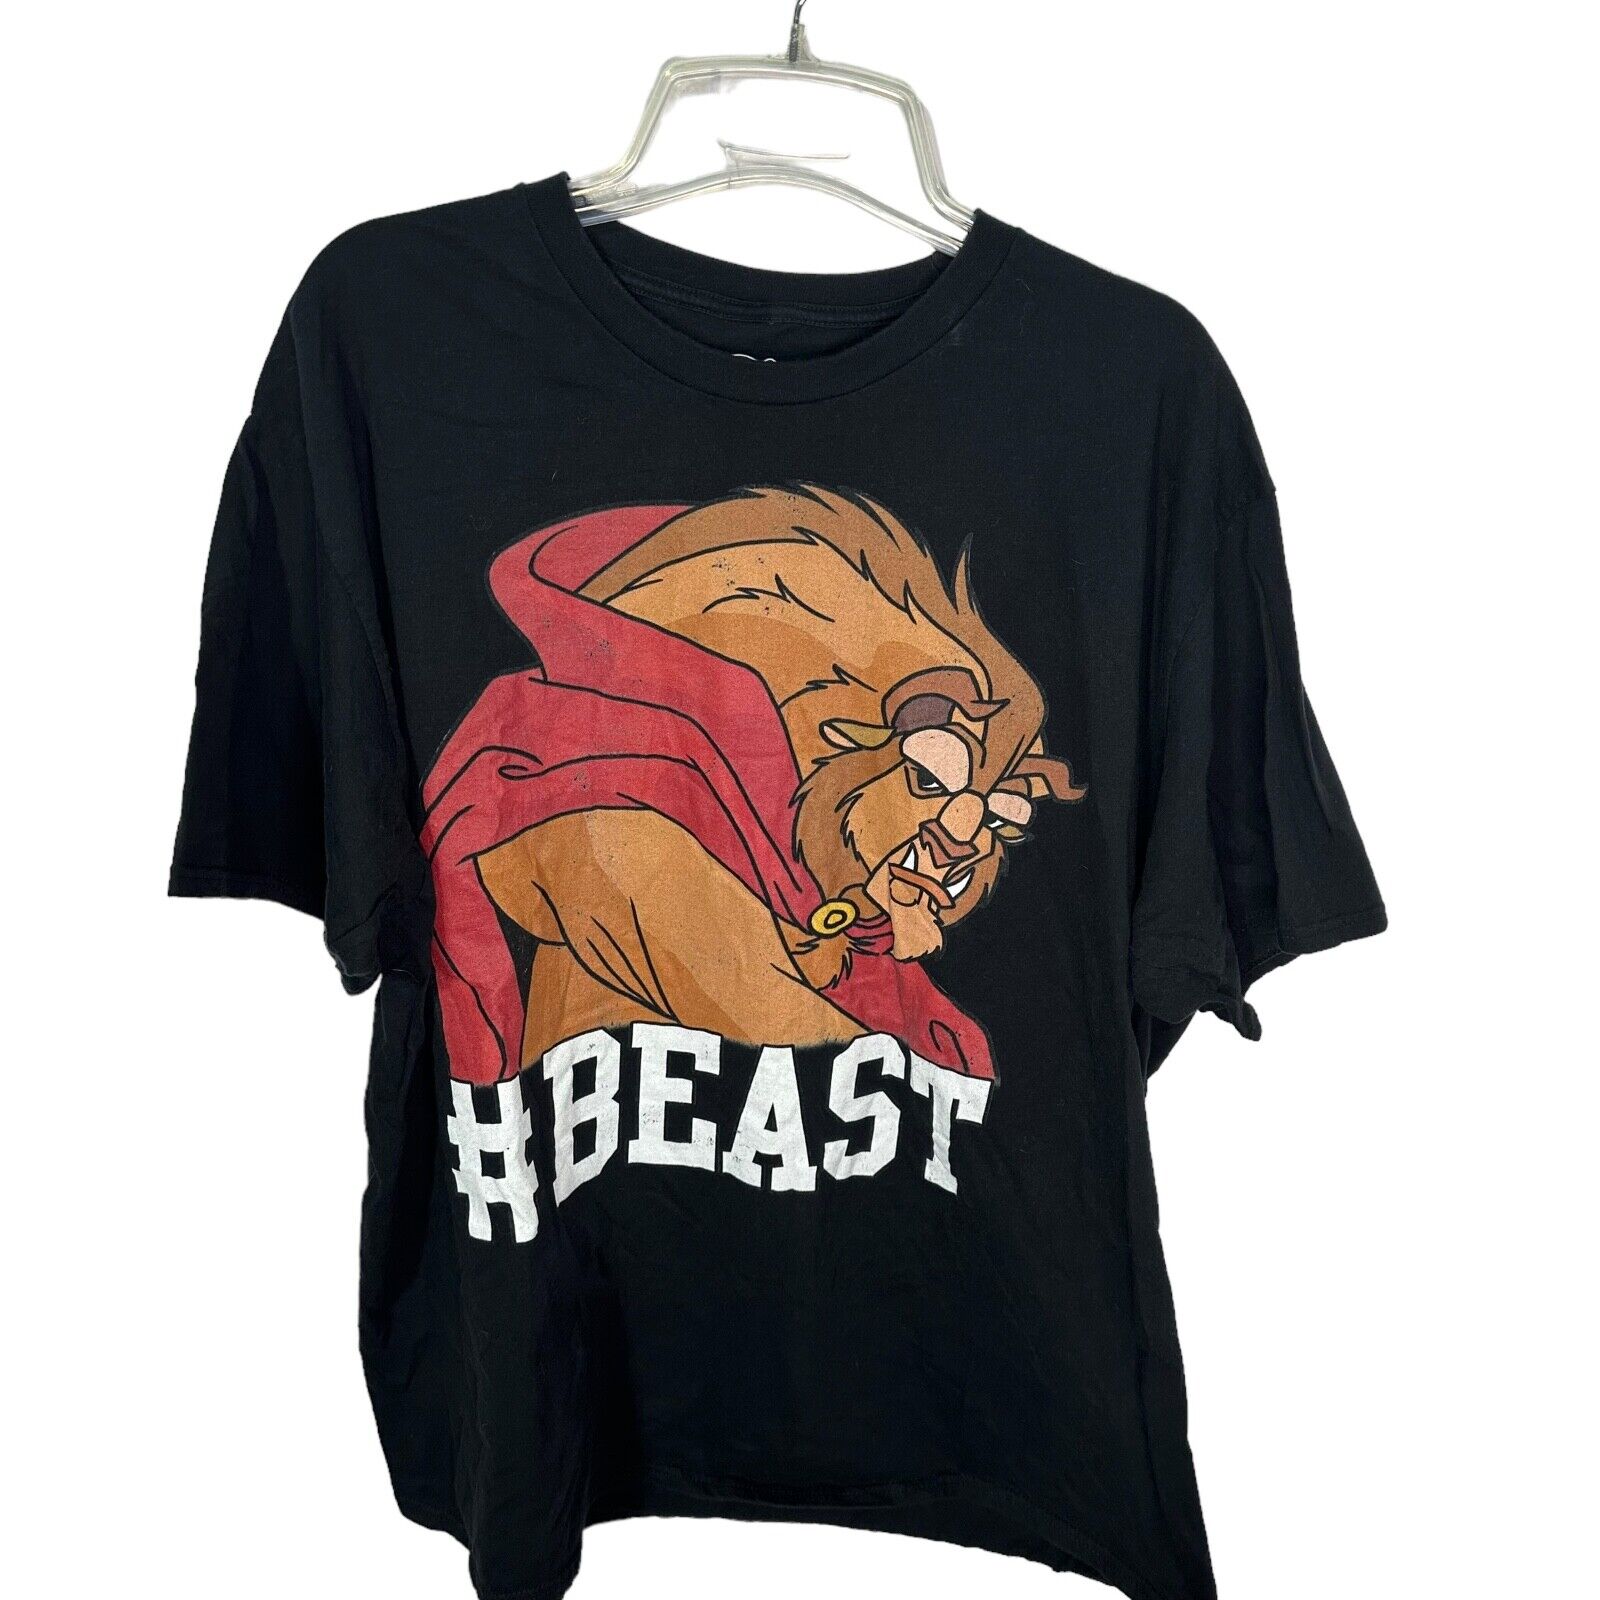 Disney Men's Beauty and the Beast #Beast Shirt - Size XL